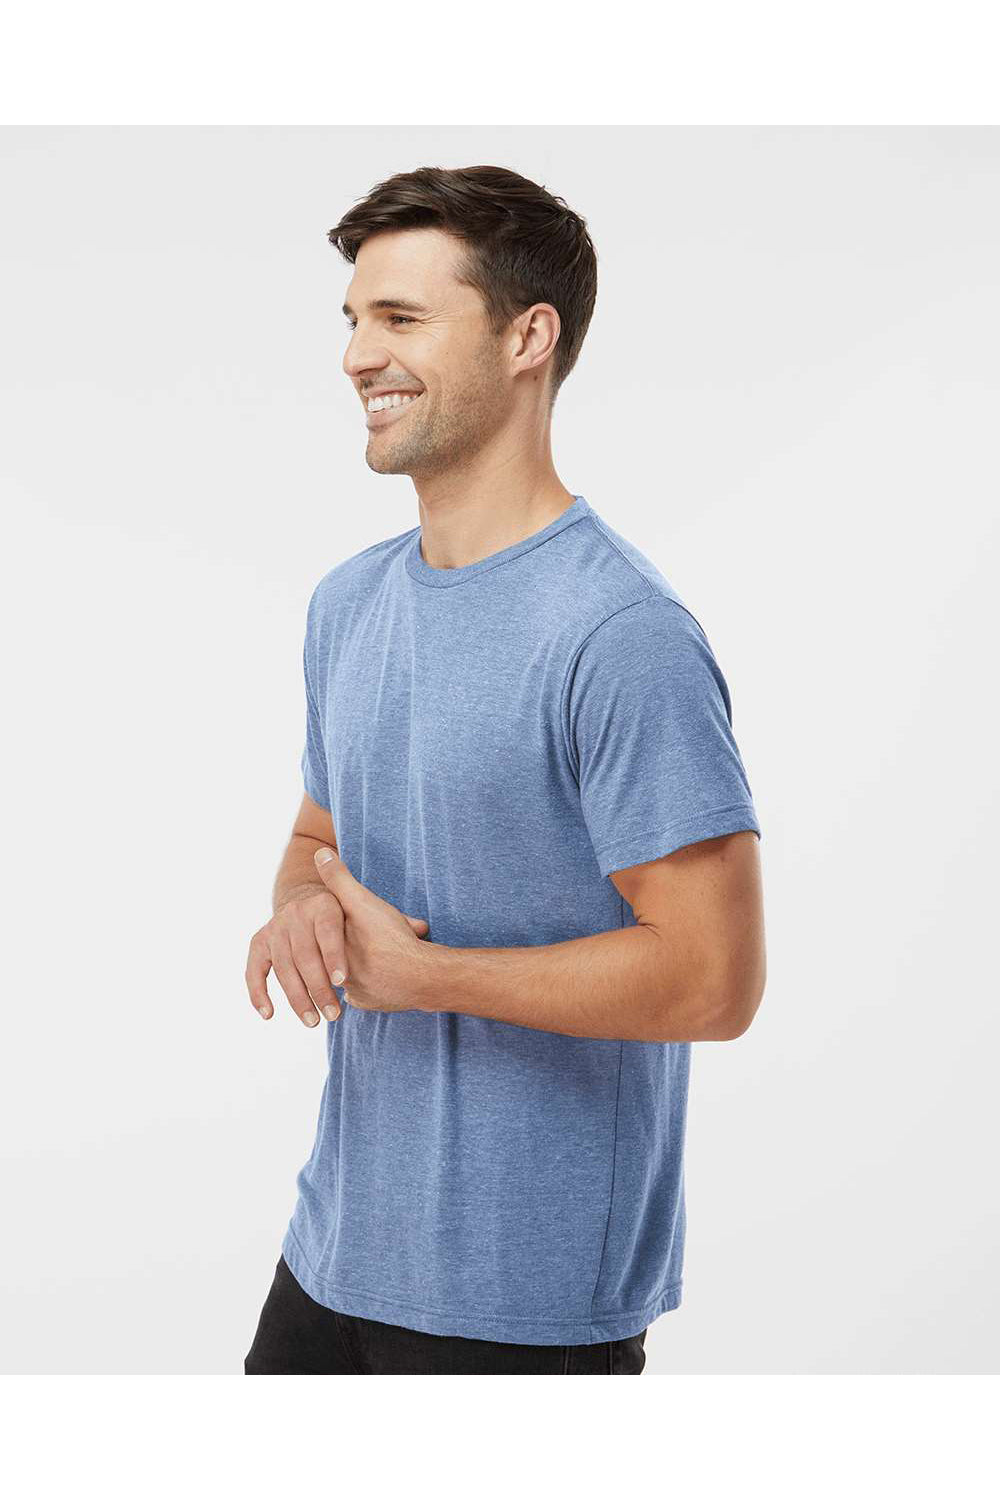 Tultex 254 Mens Short Sleeve Crewneck T-Shirt Athletic Blue Model Side